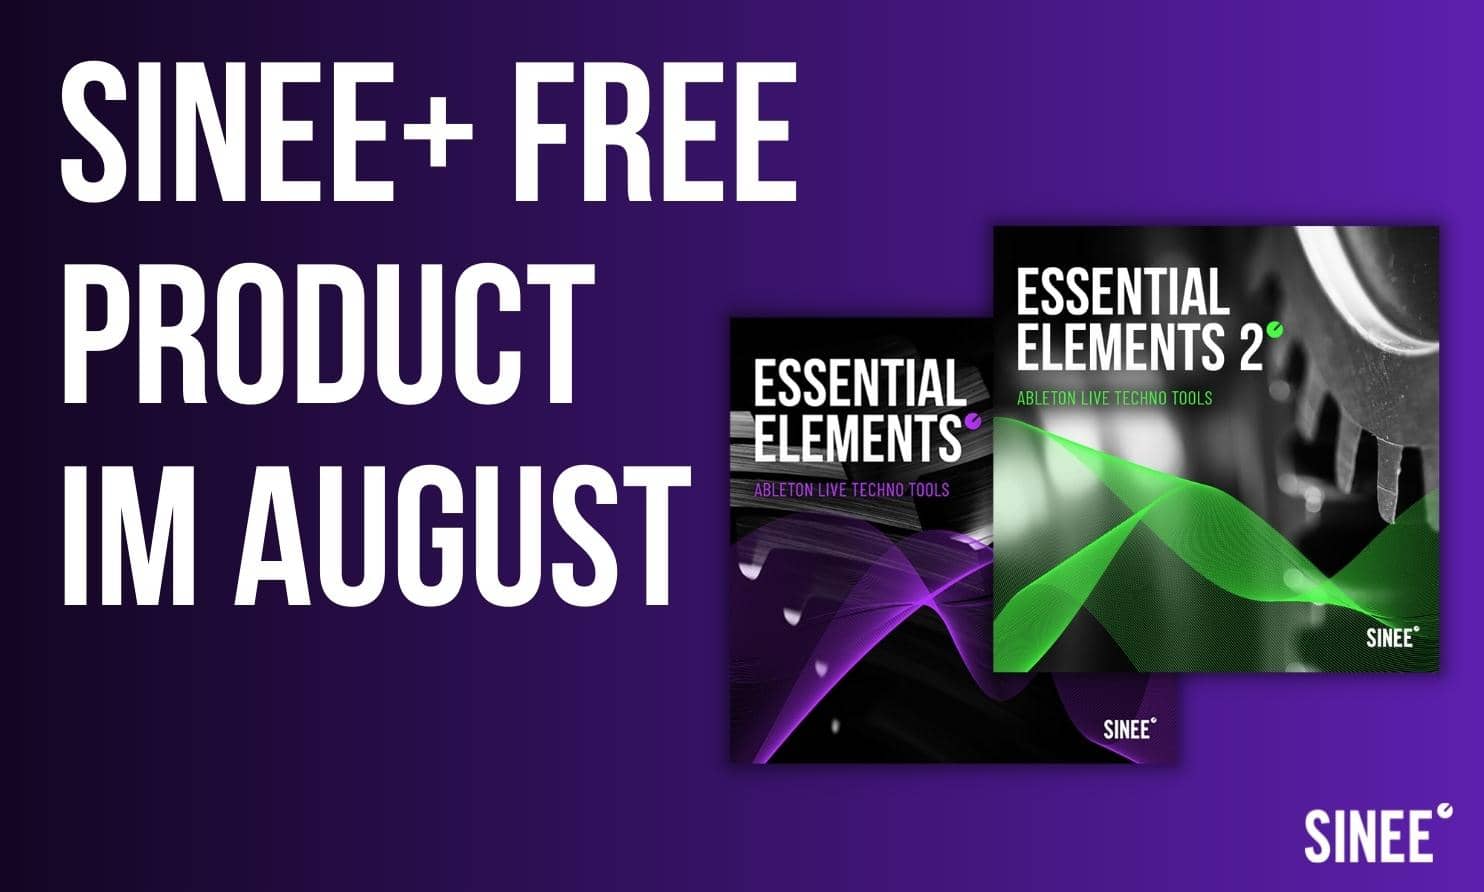 Neues Sinee+ Produkt im August: Ableton Live Techno Tools mit Essential Elements 1 & 2